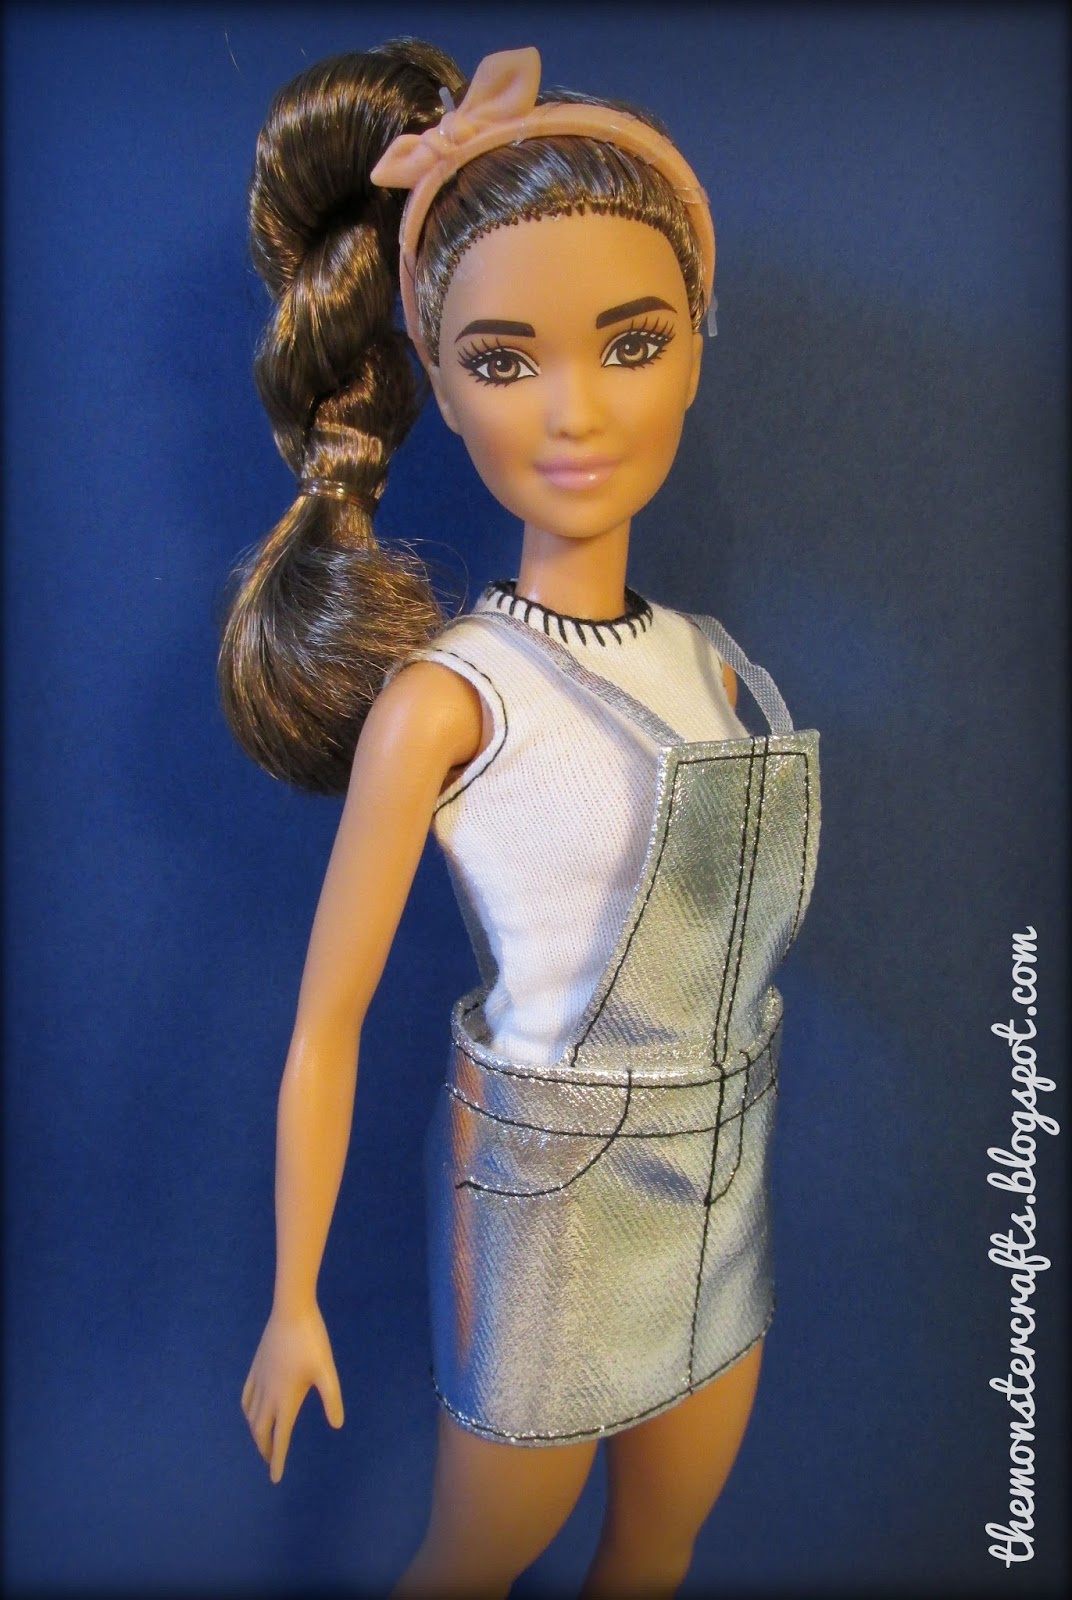 Doll Review: Barbie Fashionistas Petite 